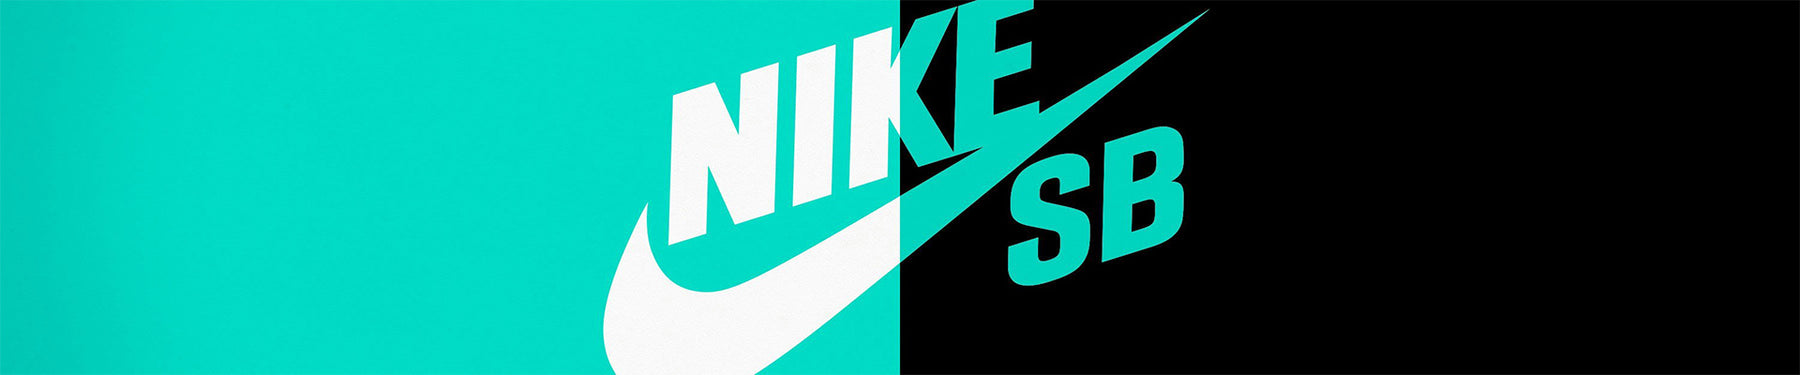 Nike SB x Air Jordan 1 Low SB - $24.99